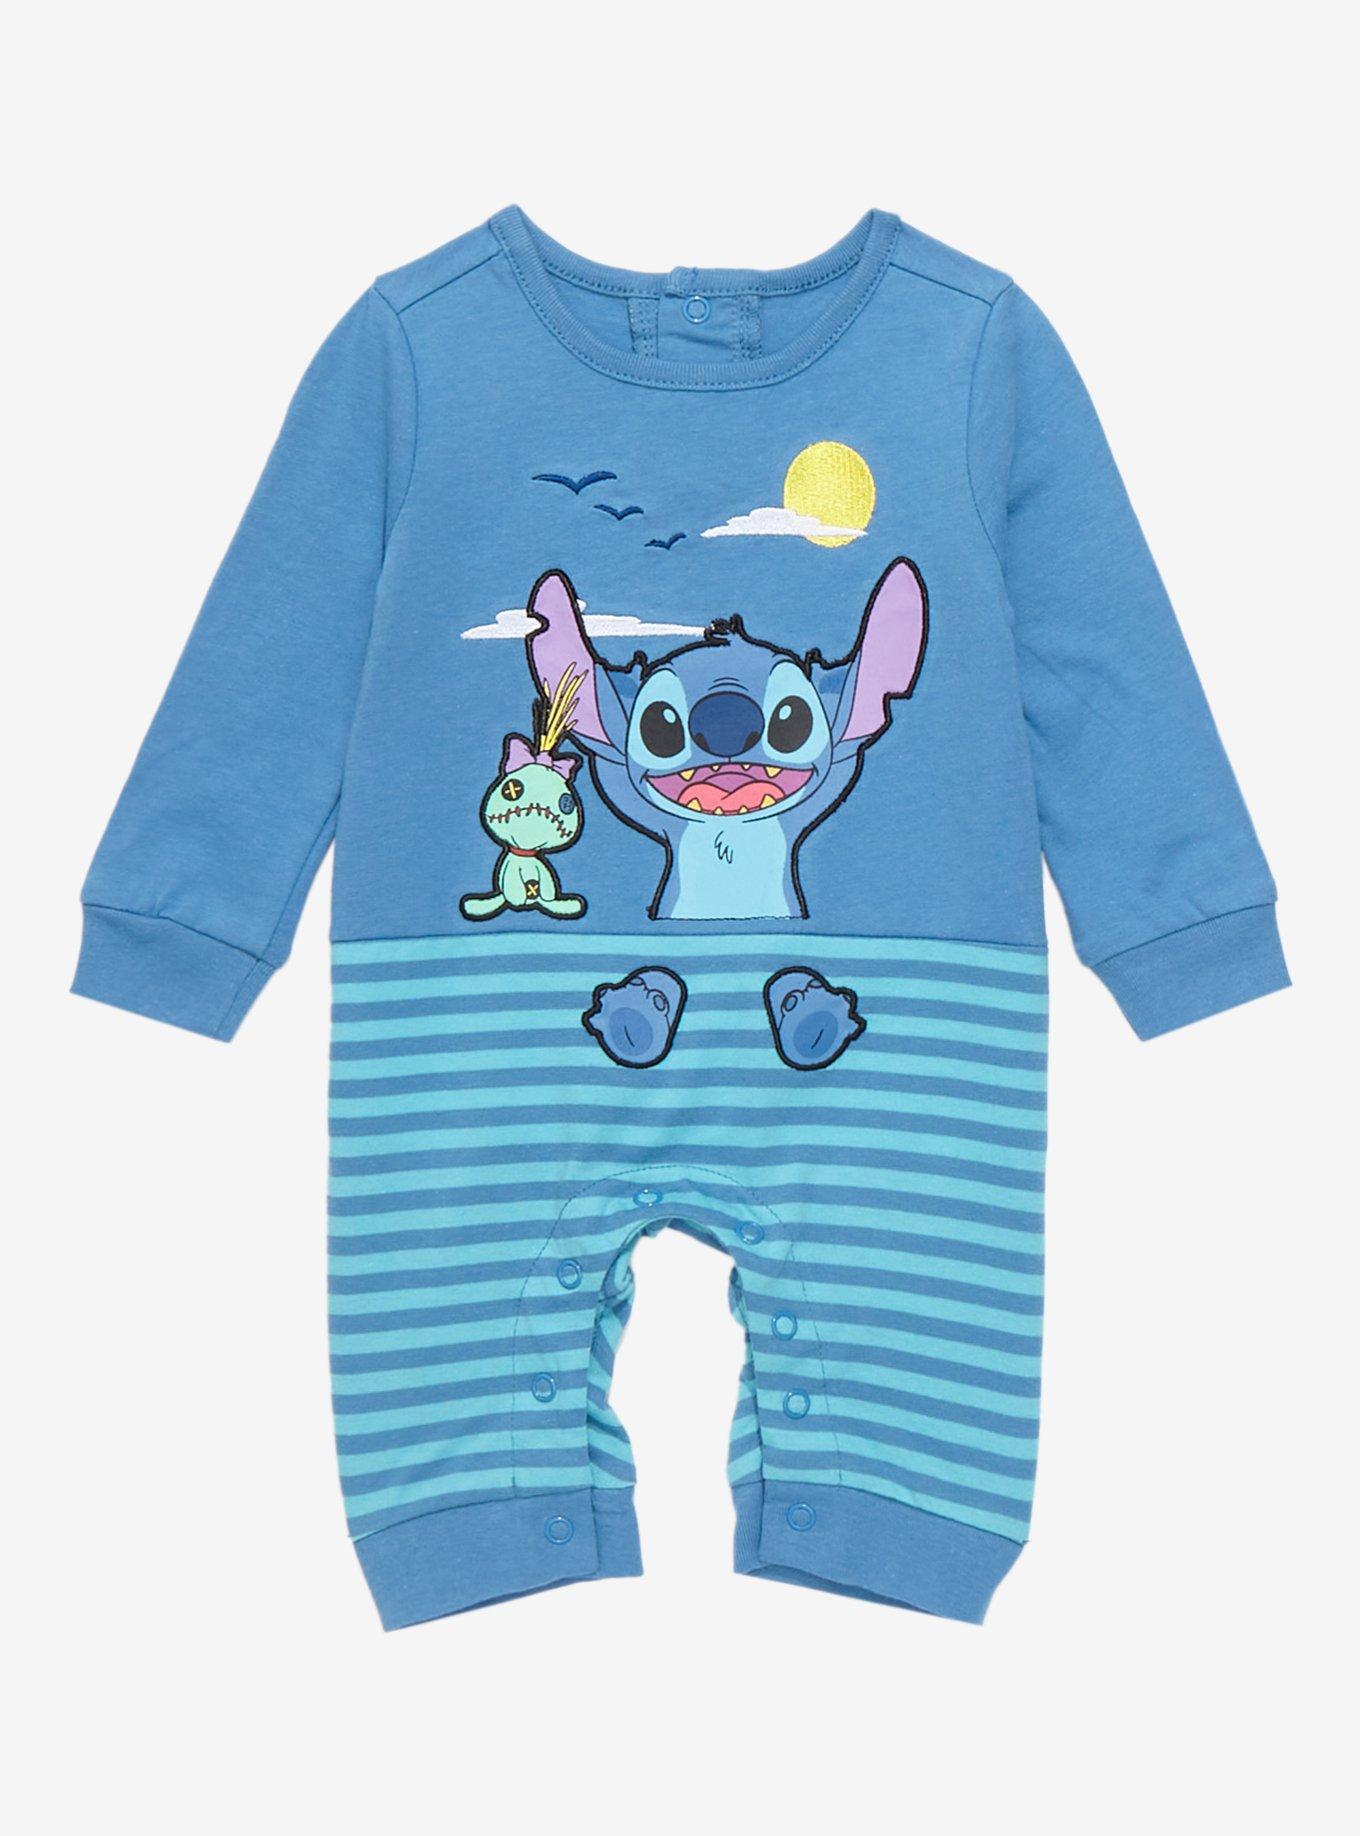 Stitch pijama  Stitch disney, Cute stitch, Lilo and stitch merchandise